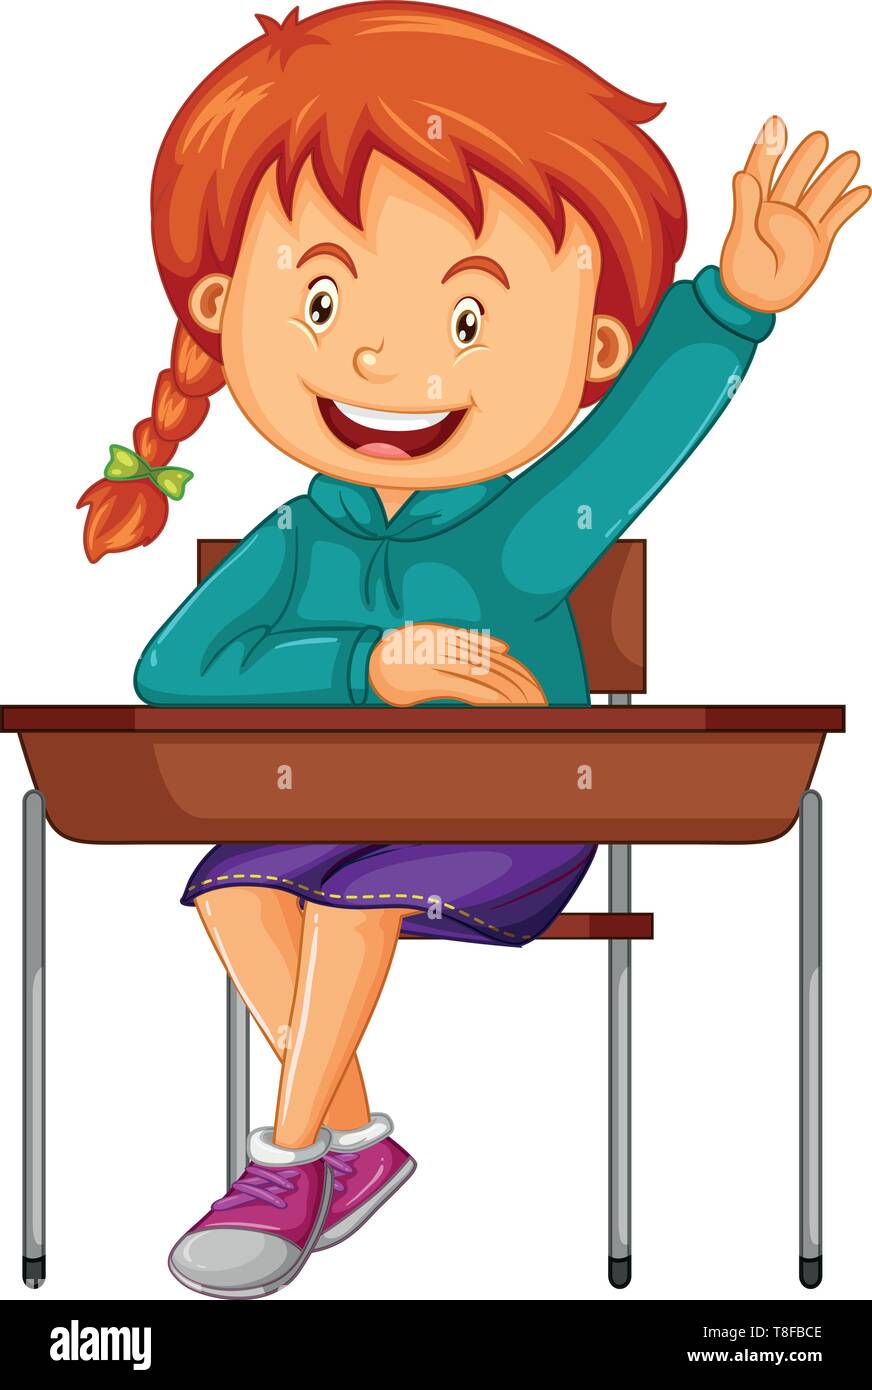 Girl Student Sit On The School Desk Illustration Stock Vector Art